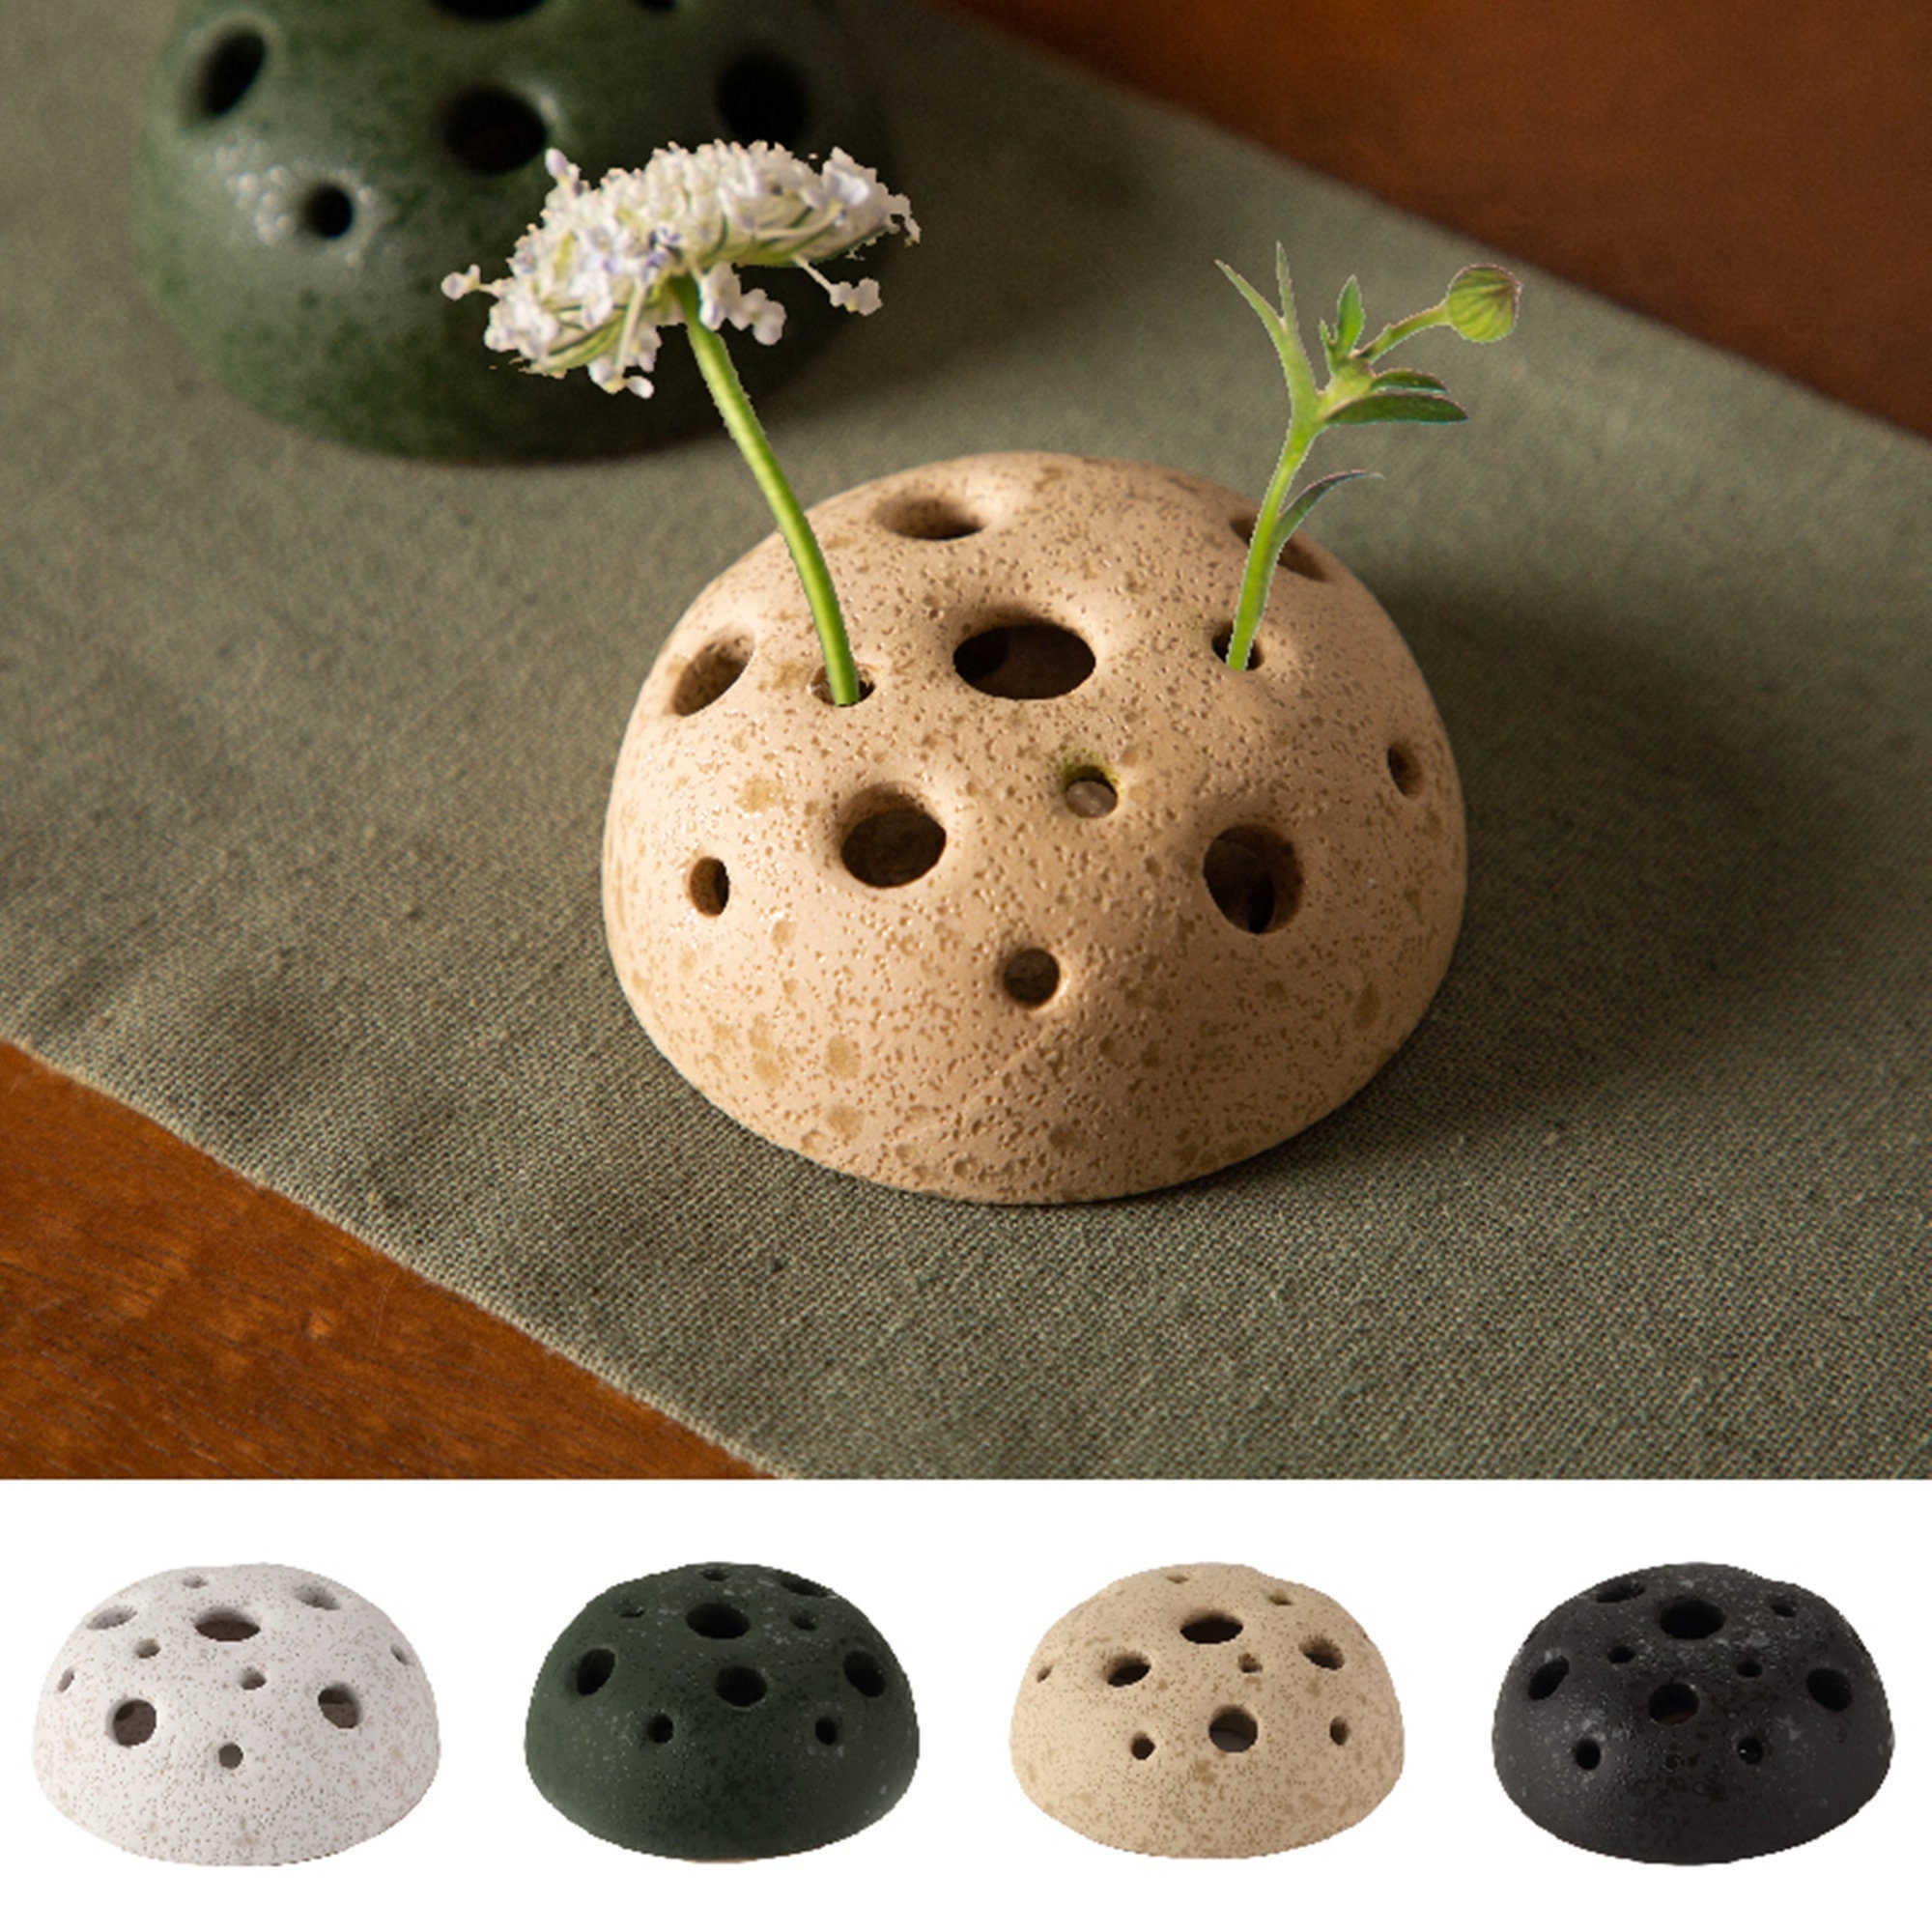 Ceramic Flower Frogs from Mud & Maker